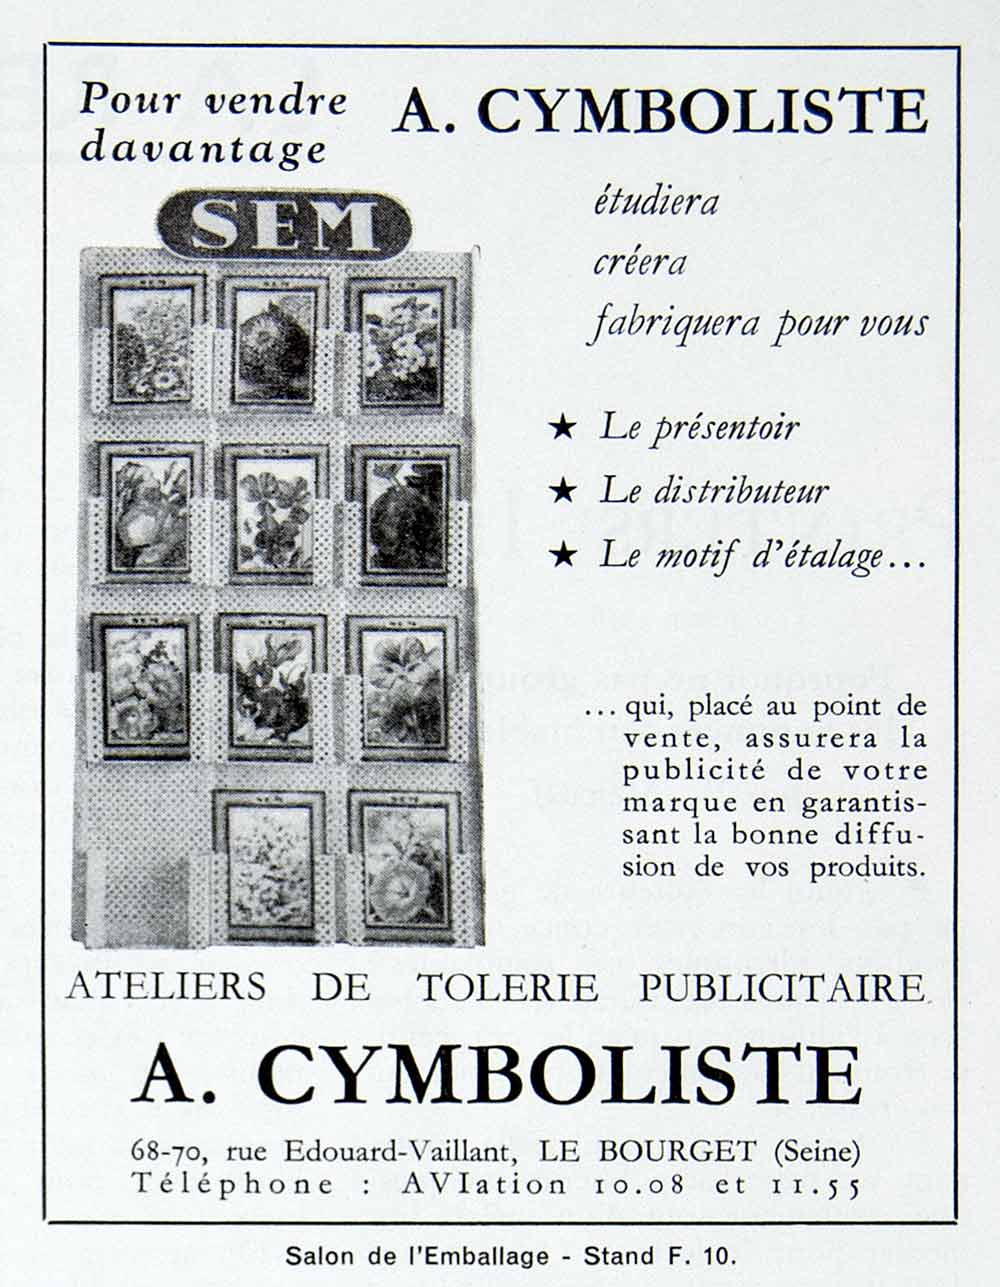 1956 Ad Cymboliste Custom Display Shelving French SEM Marketing Branding VEN6